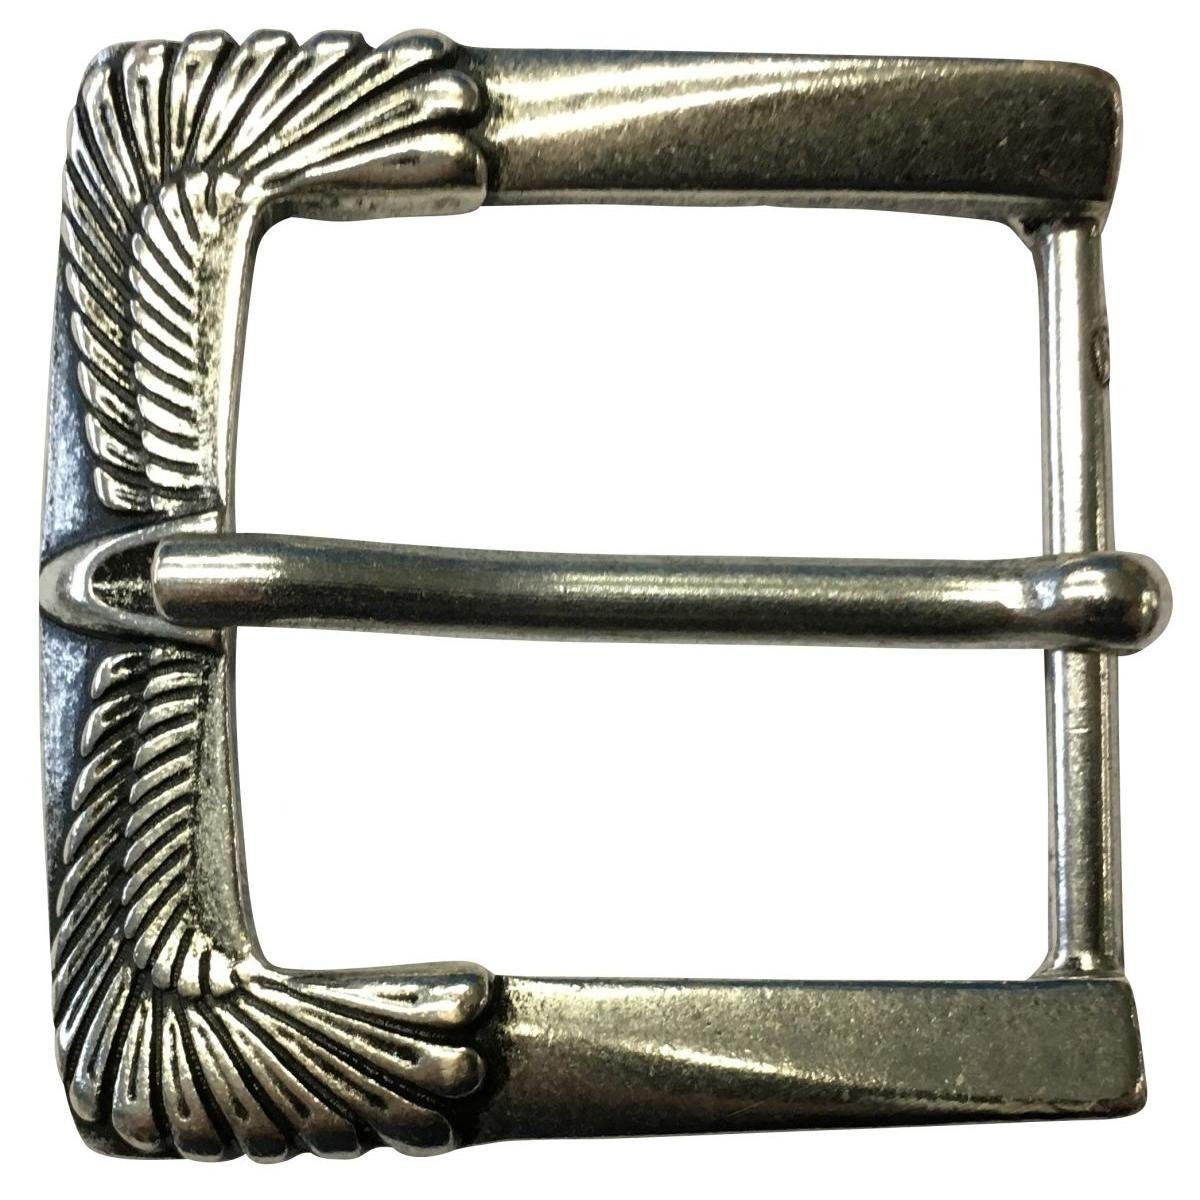 BELTINGER Gürtelschnalle Wing 4,0 cm - Gürtelschließe 40mm - Dorn-Schließe - Gürtel bis 4cm